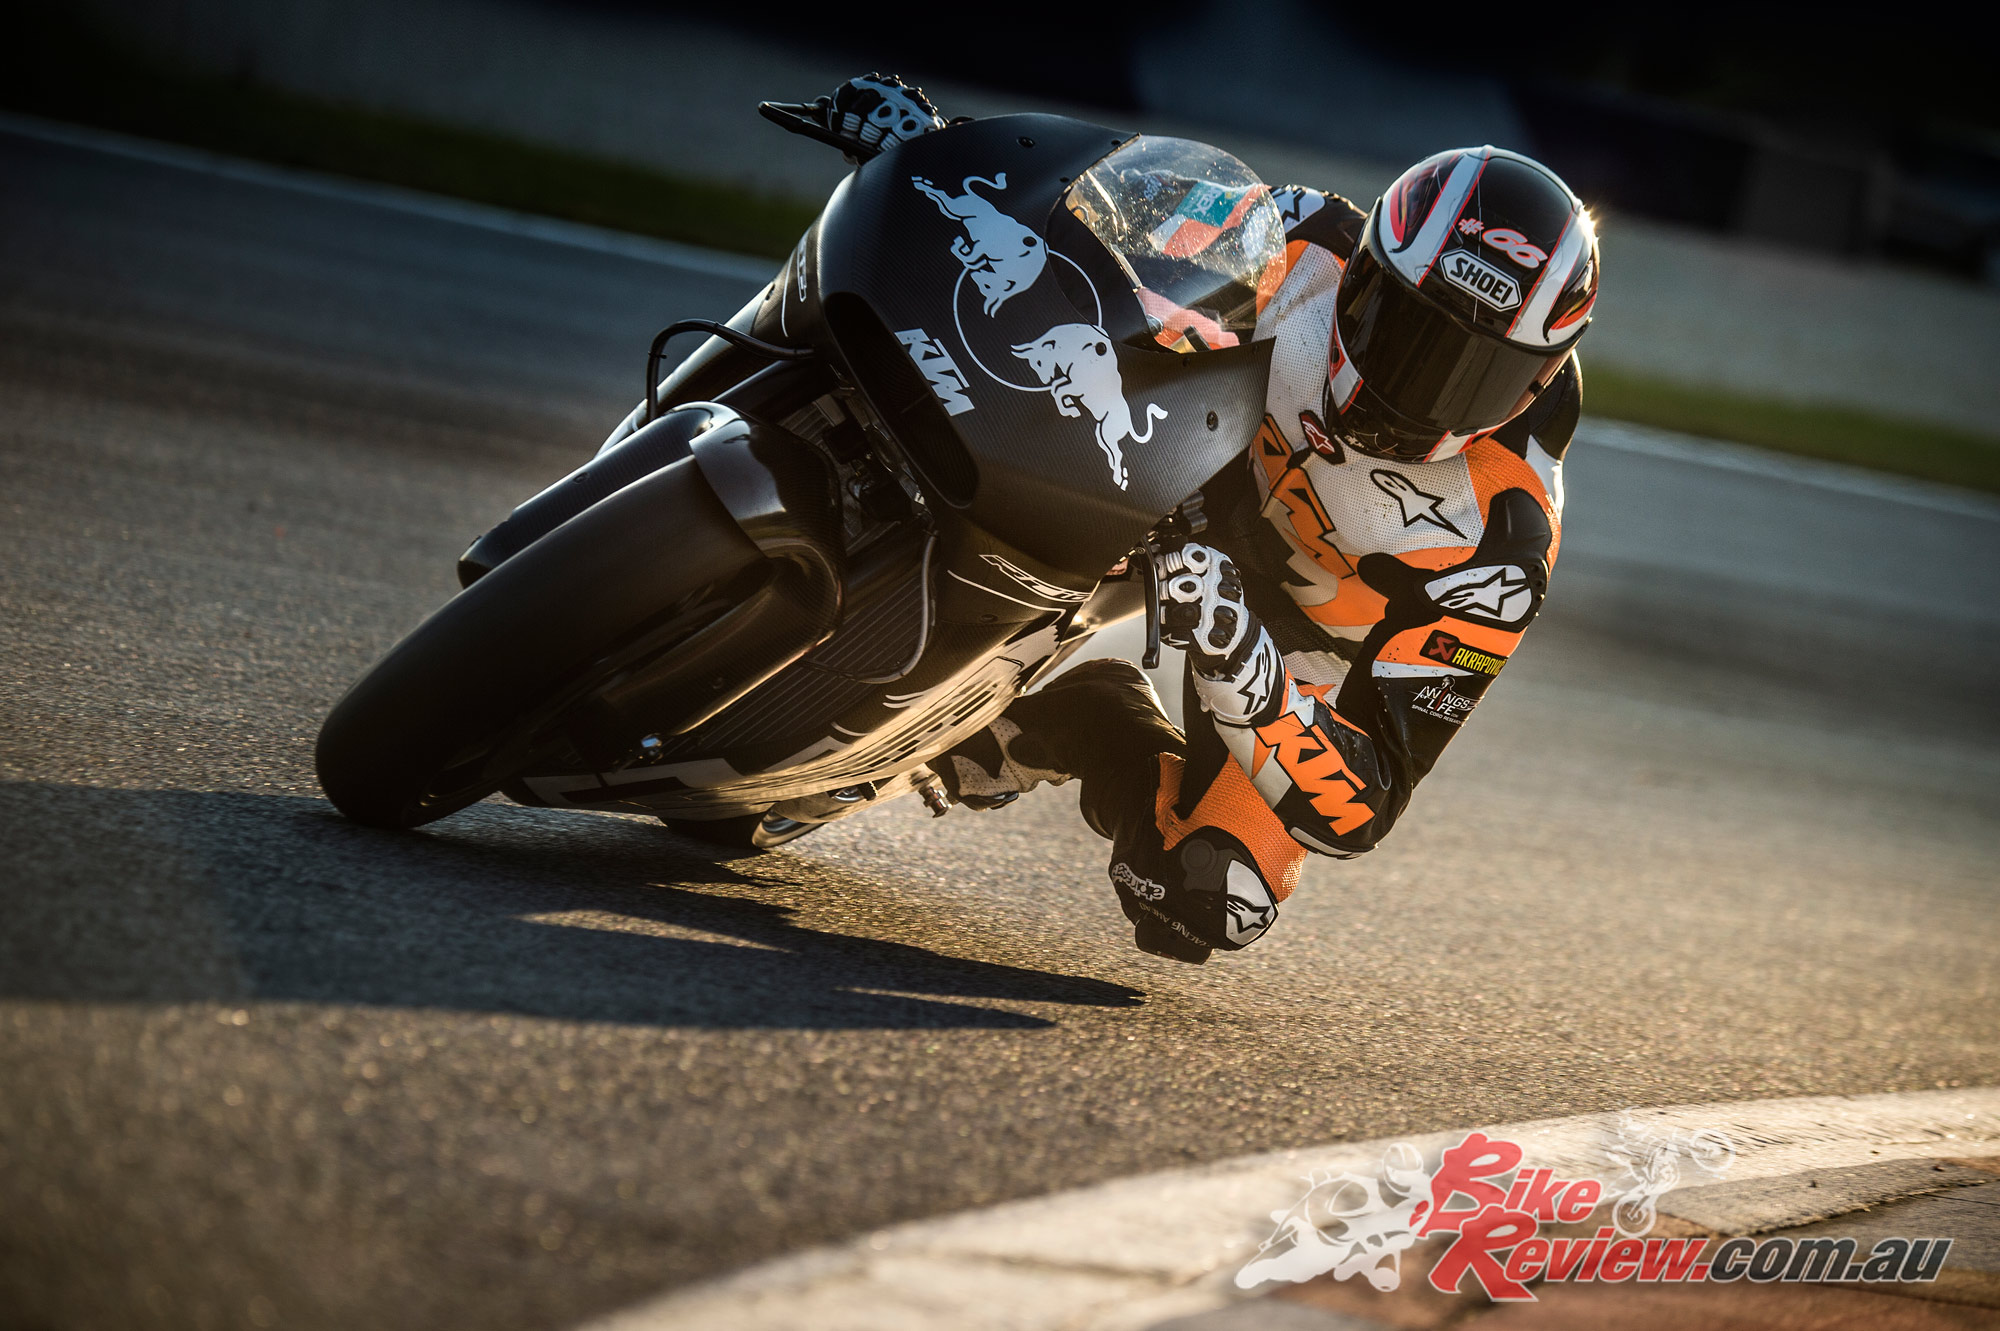 The KTM RC16 MotoGP machine - Bike Review